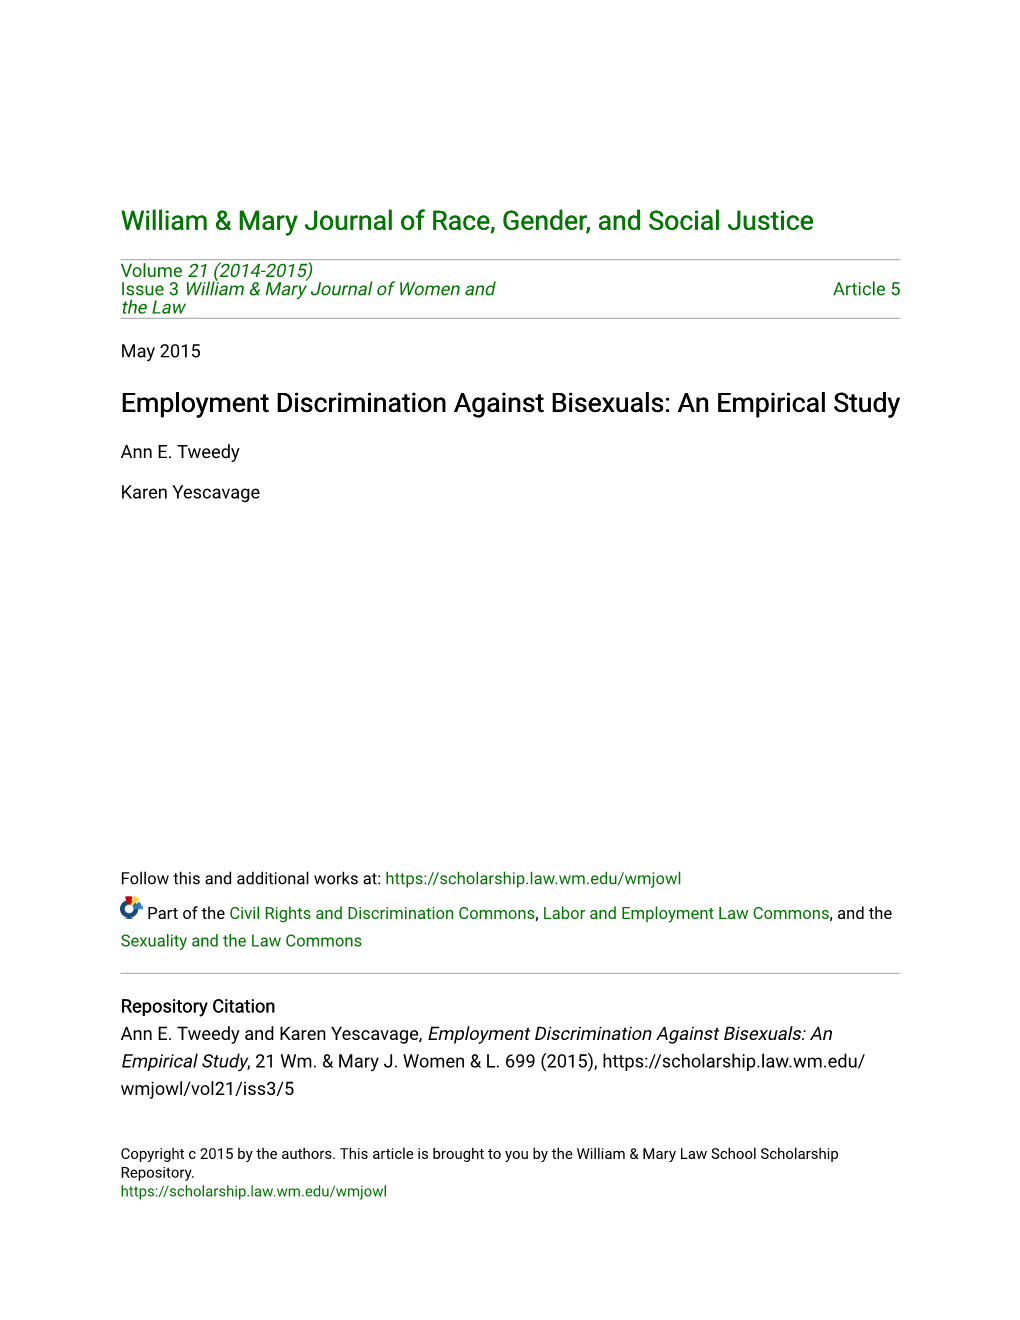 Employment Discrimination Against Bisexuals: an Empirical Study